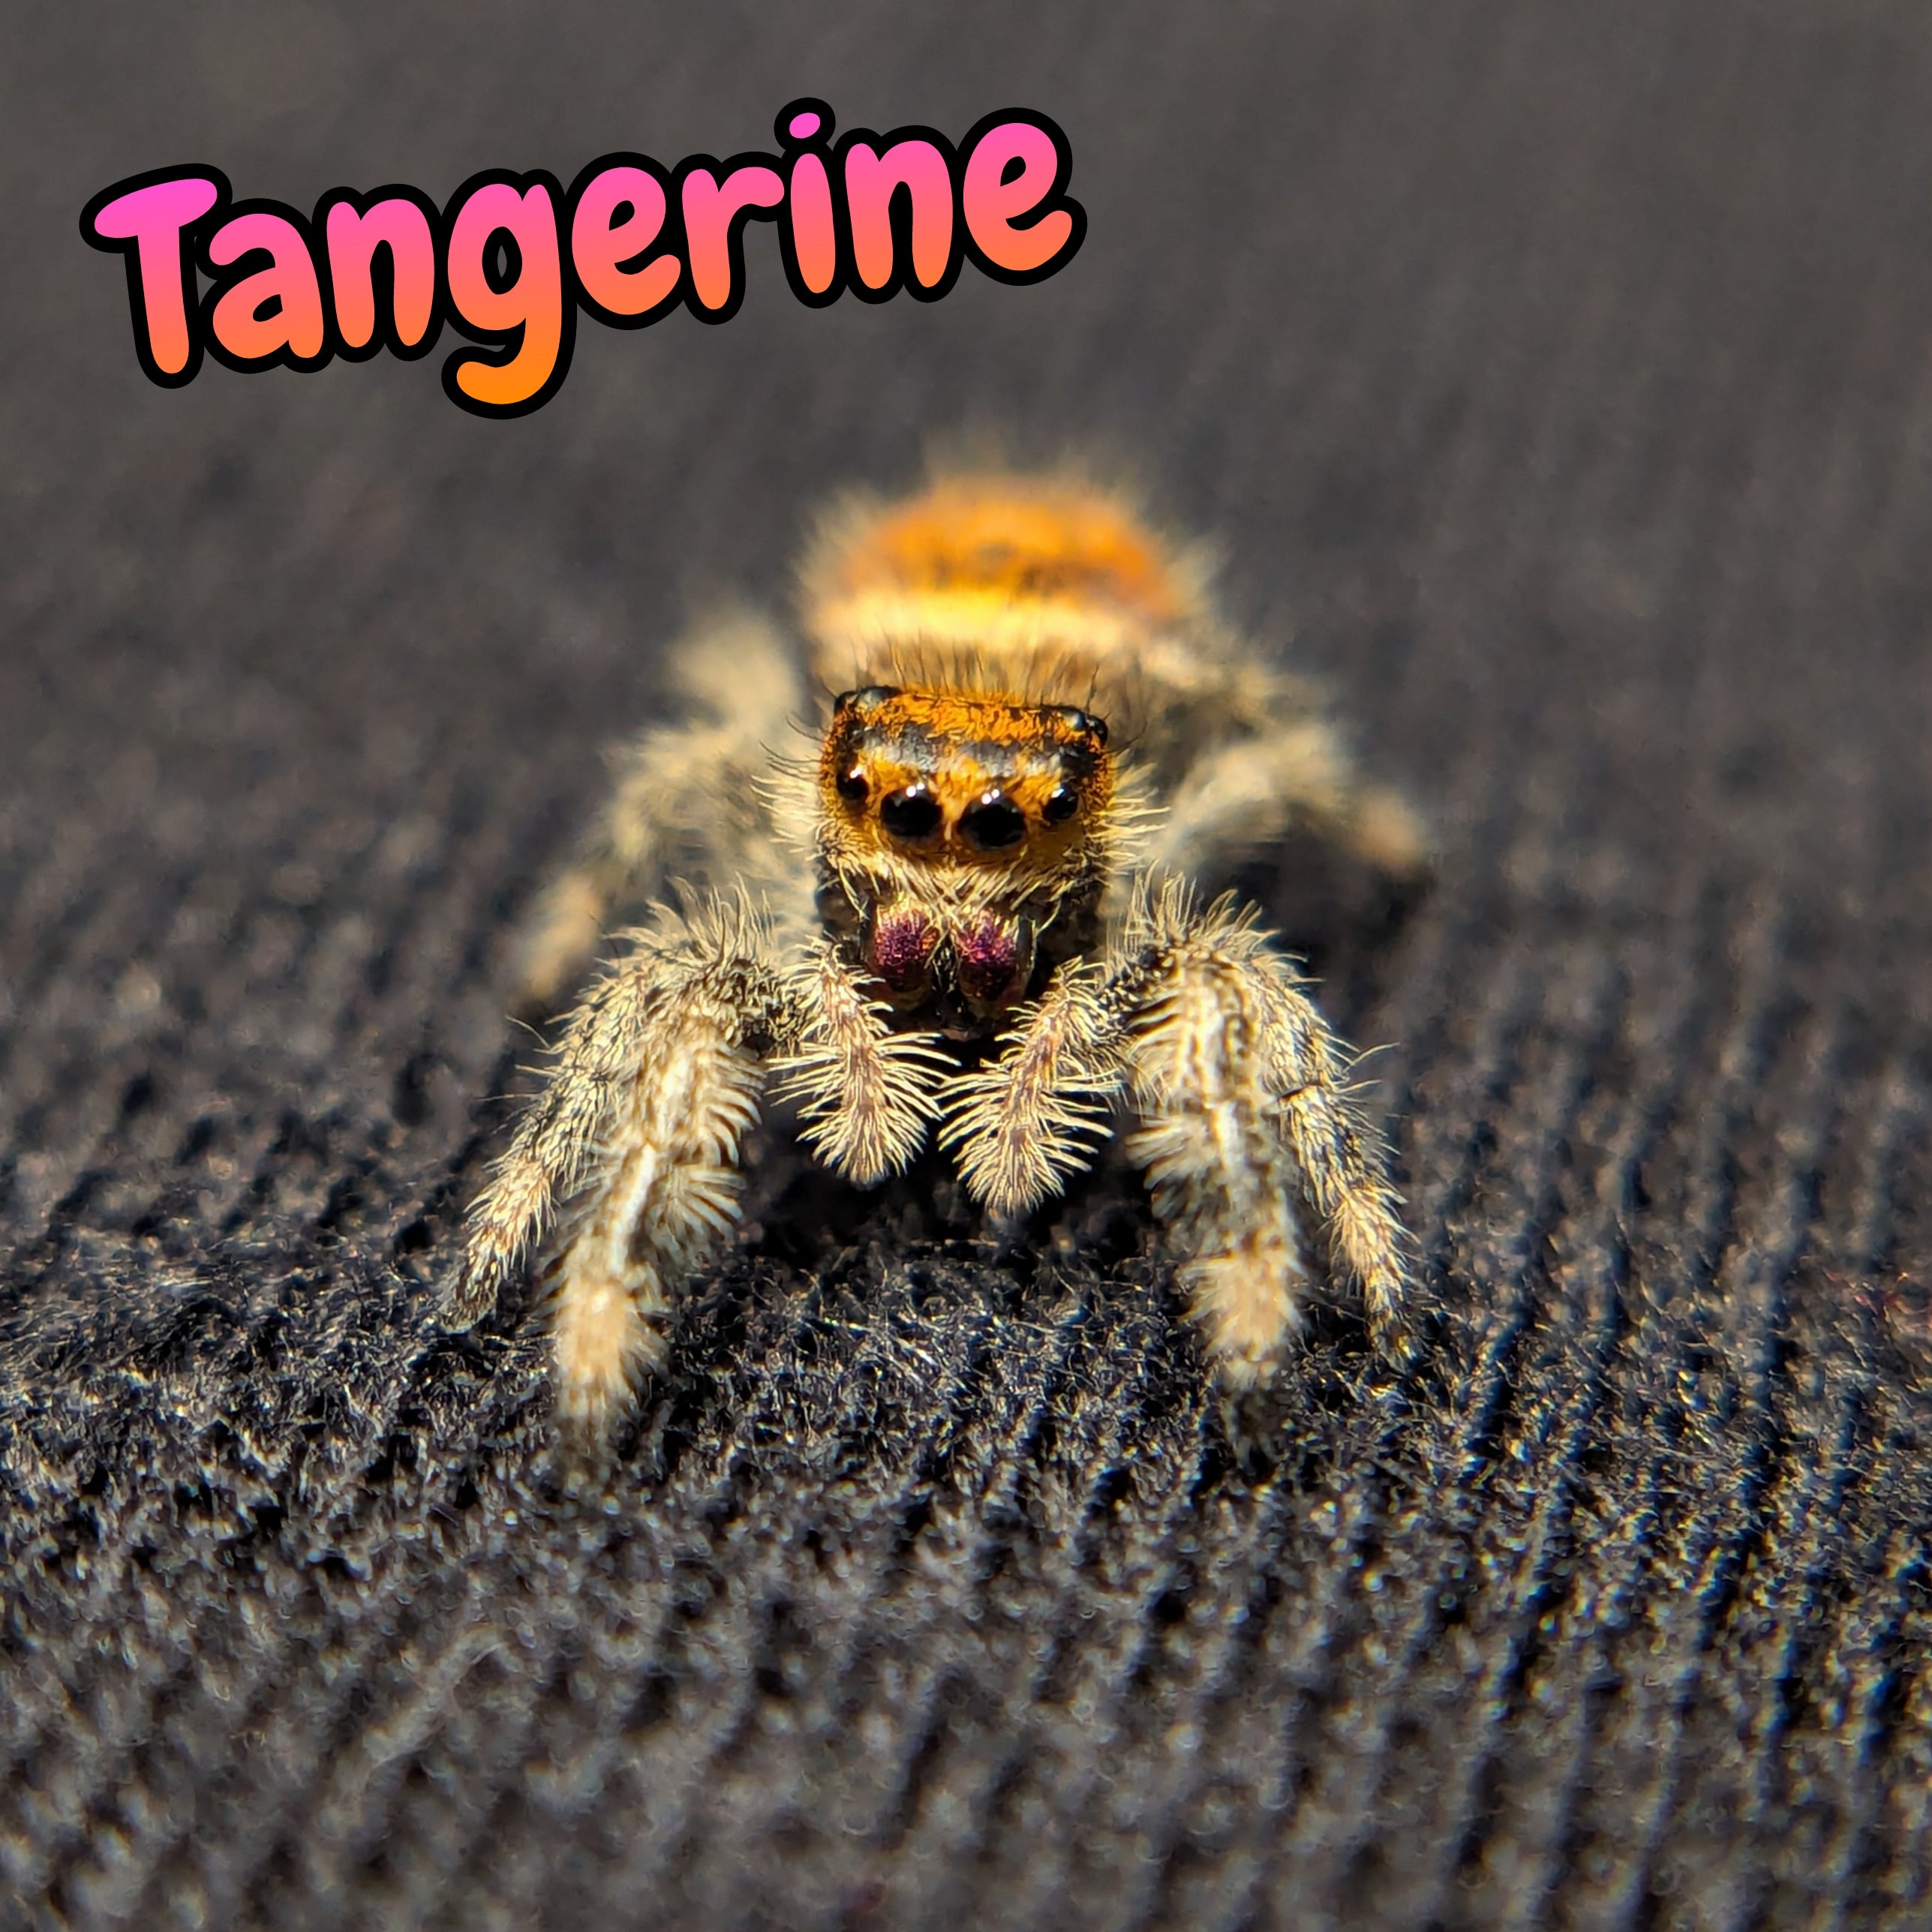 Regal Jumping Spider "Tangerine"